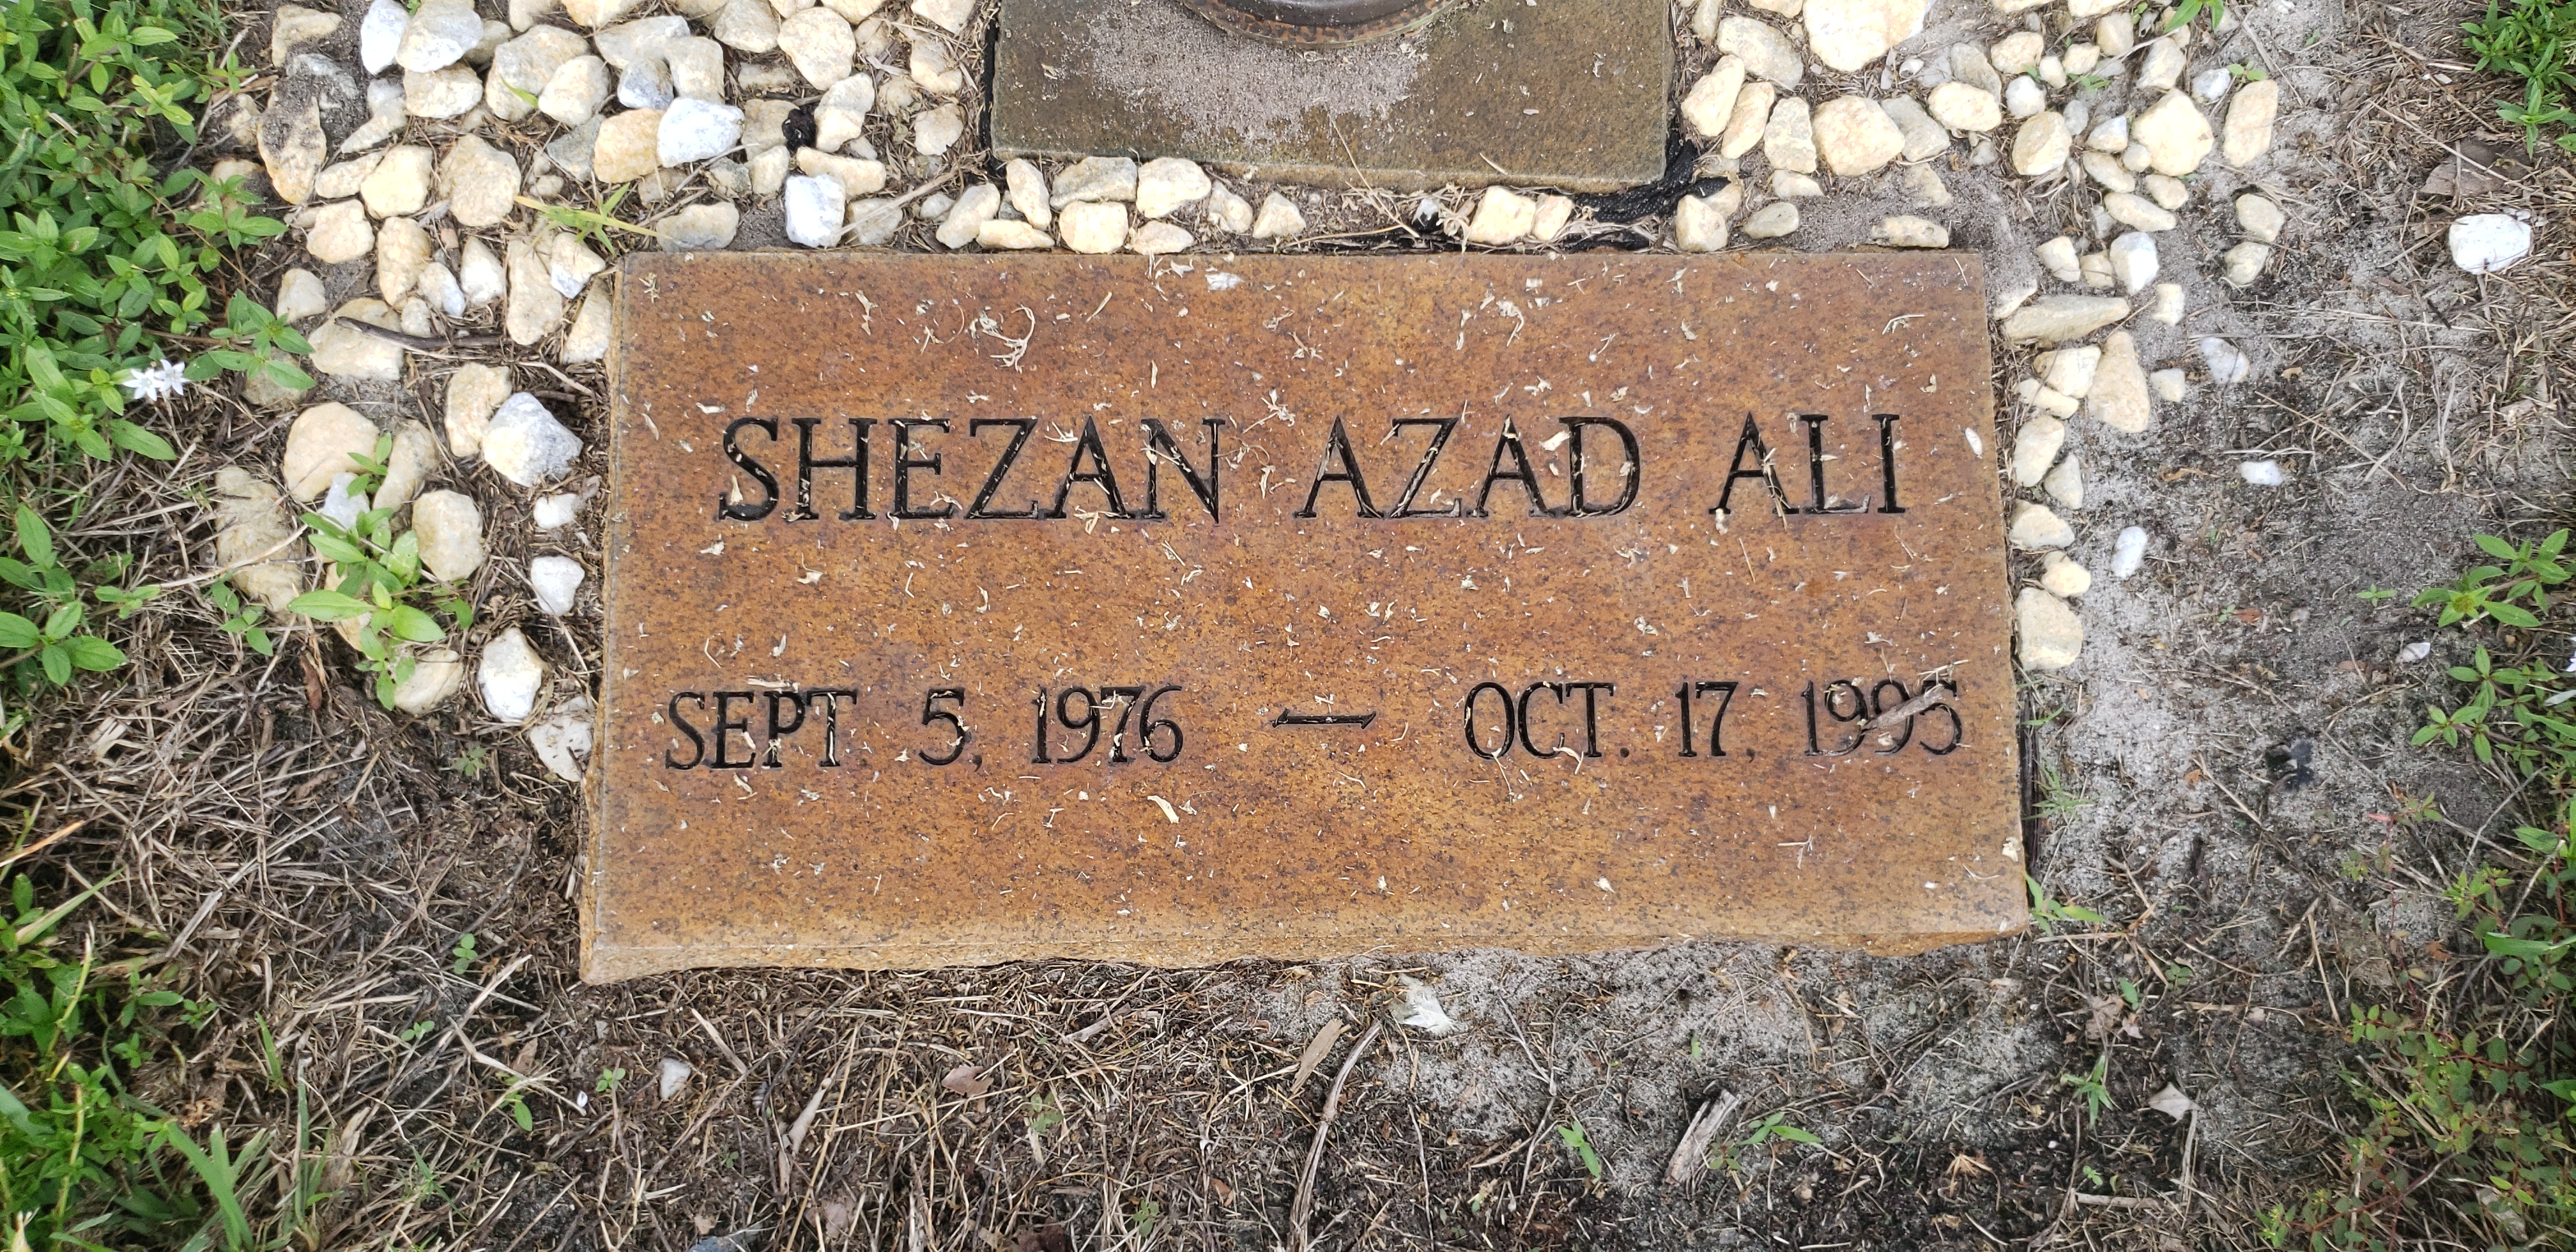 Shezan Azad Ali